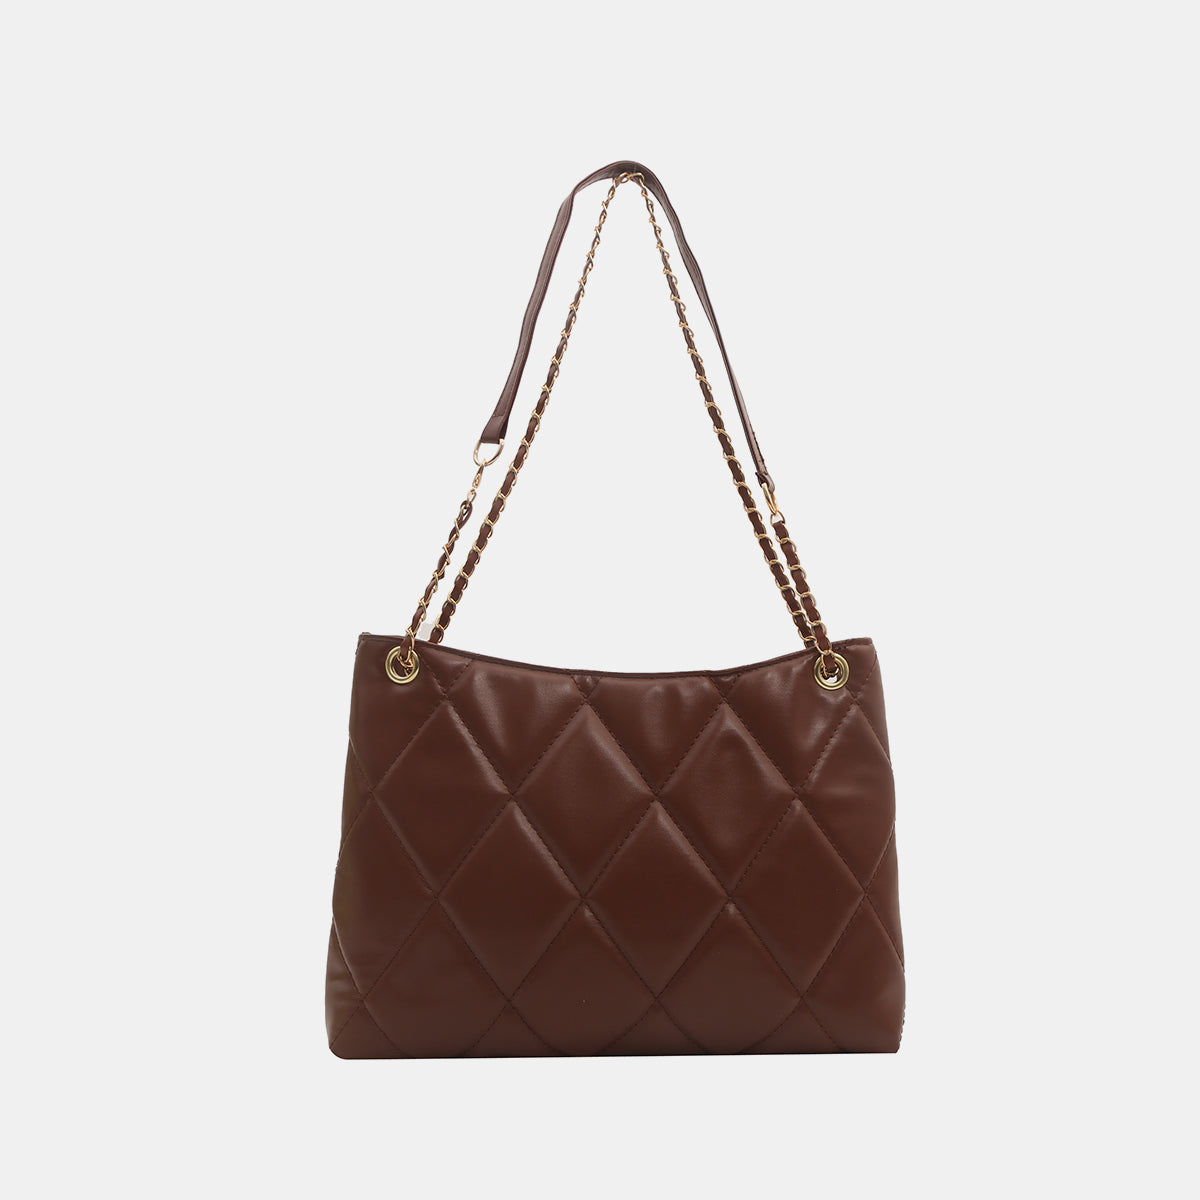 PU Leather Medium Handbag Dark Brown One Size